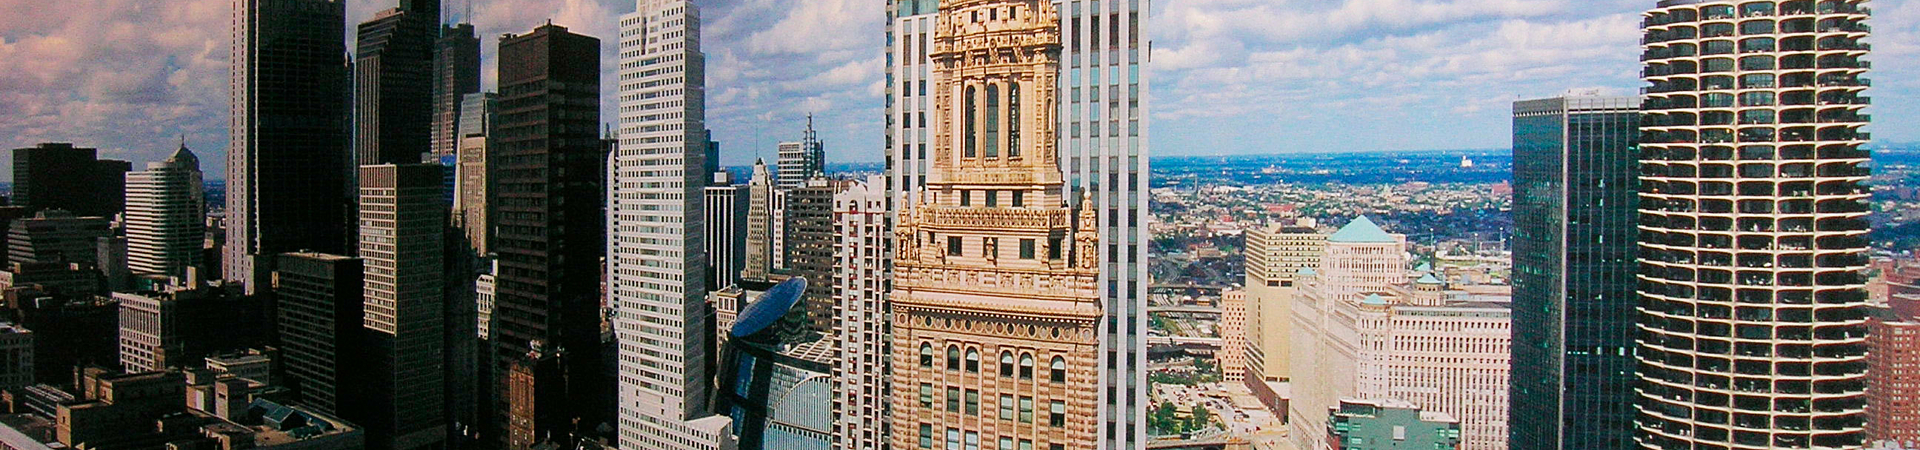 Custom installed wallpaper mural showing the Chicago skyline.